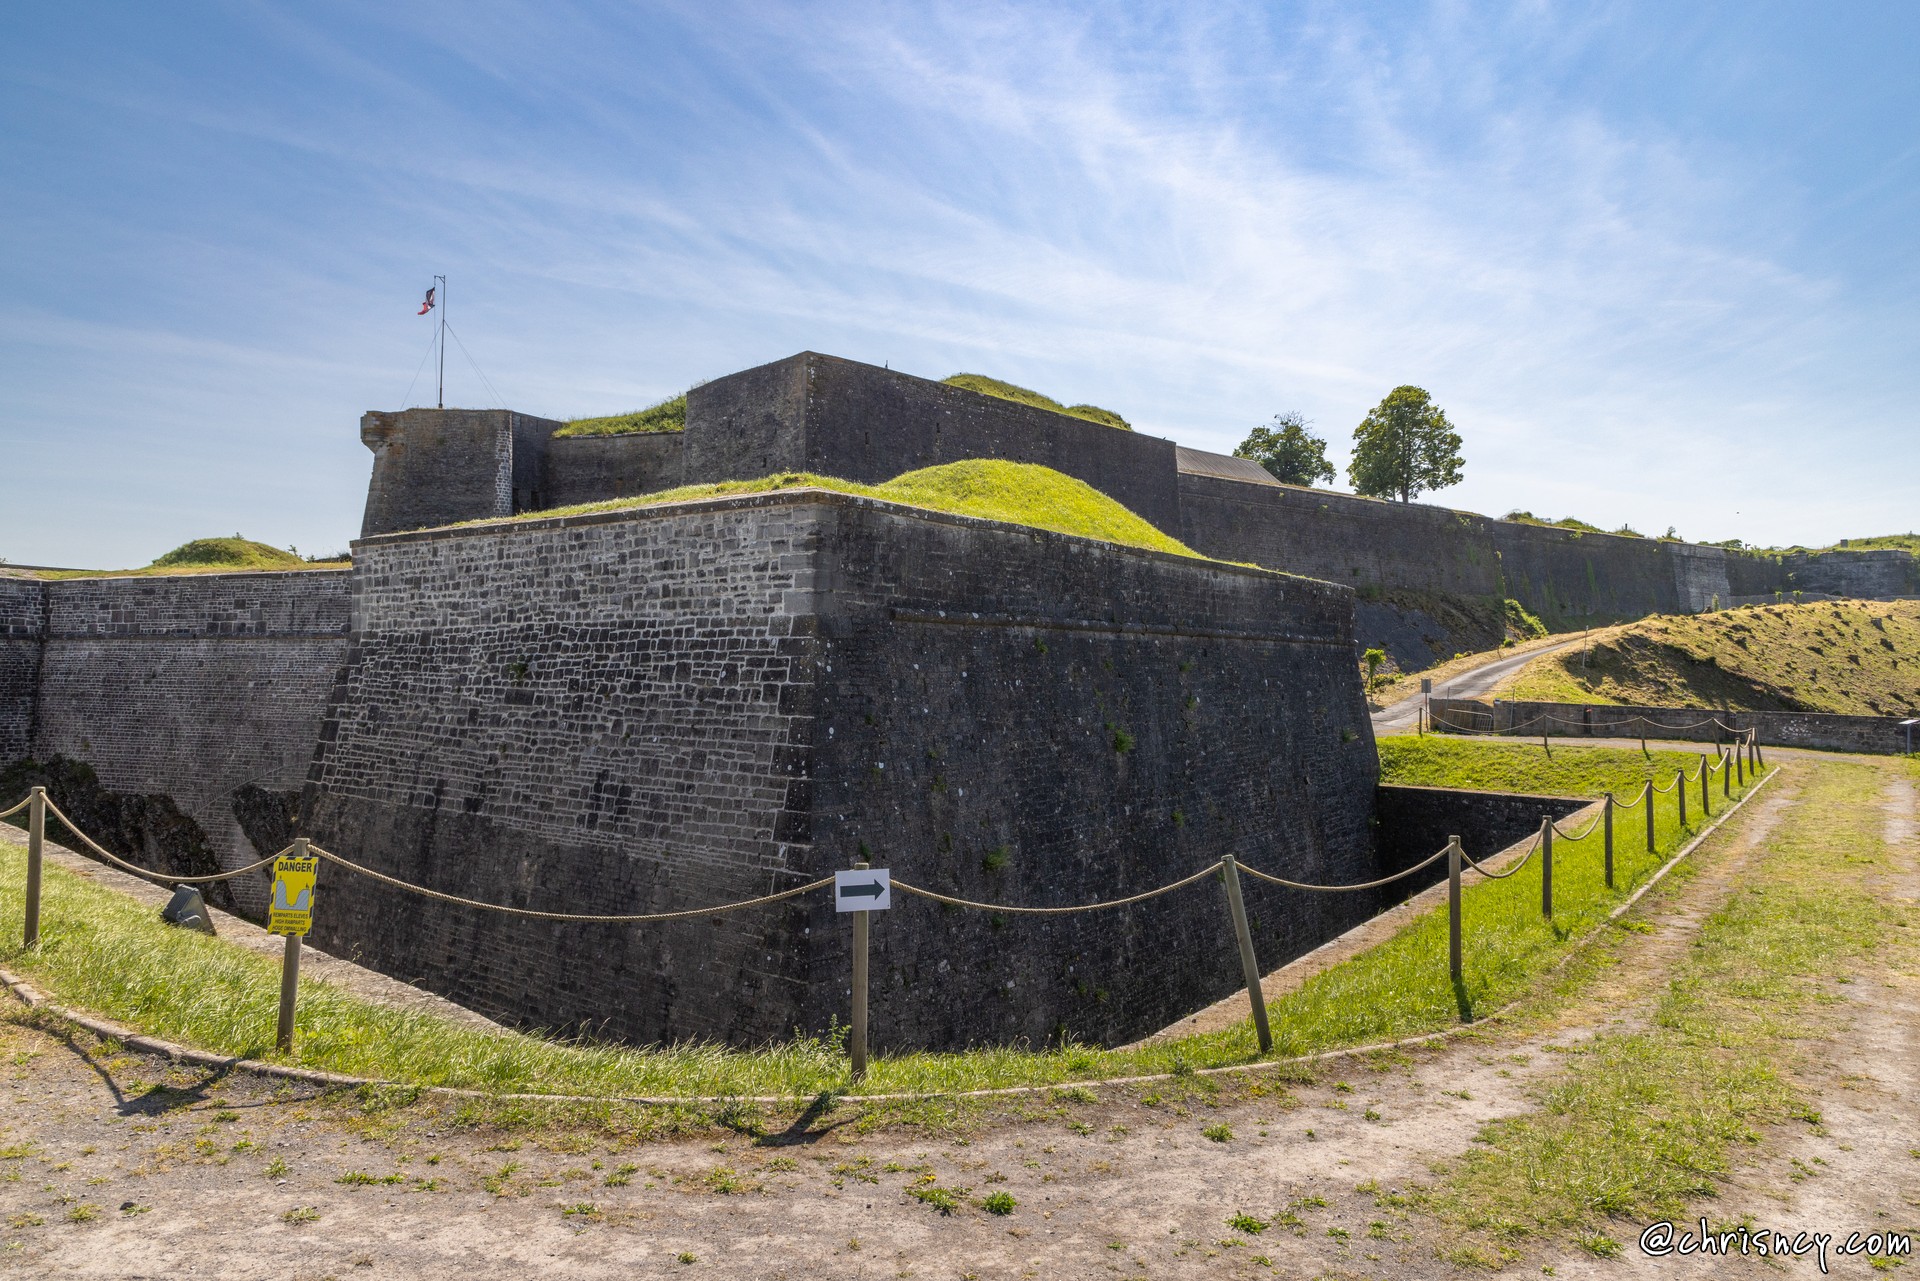 20230601-102_6876-Givet Fort de Charlemont.jpg